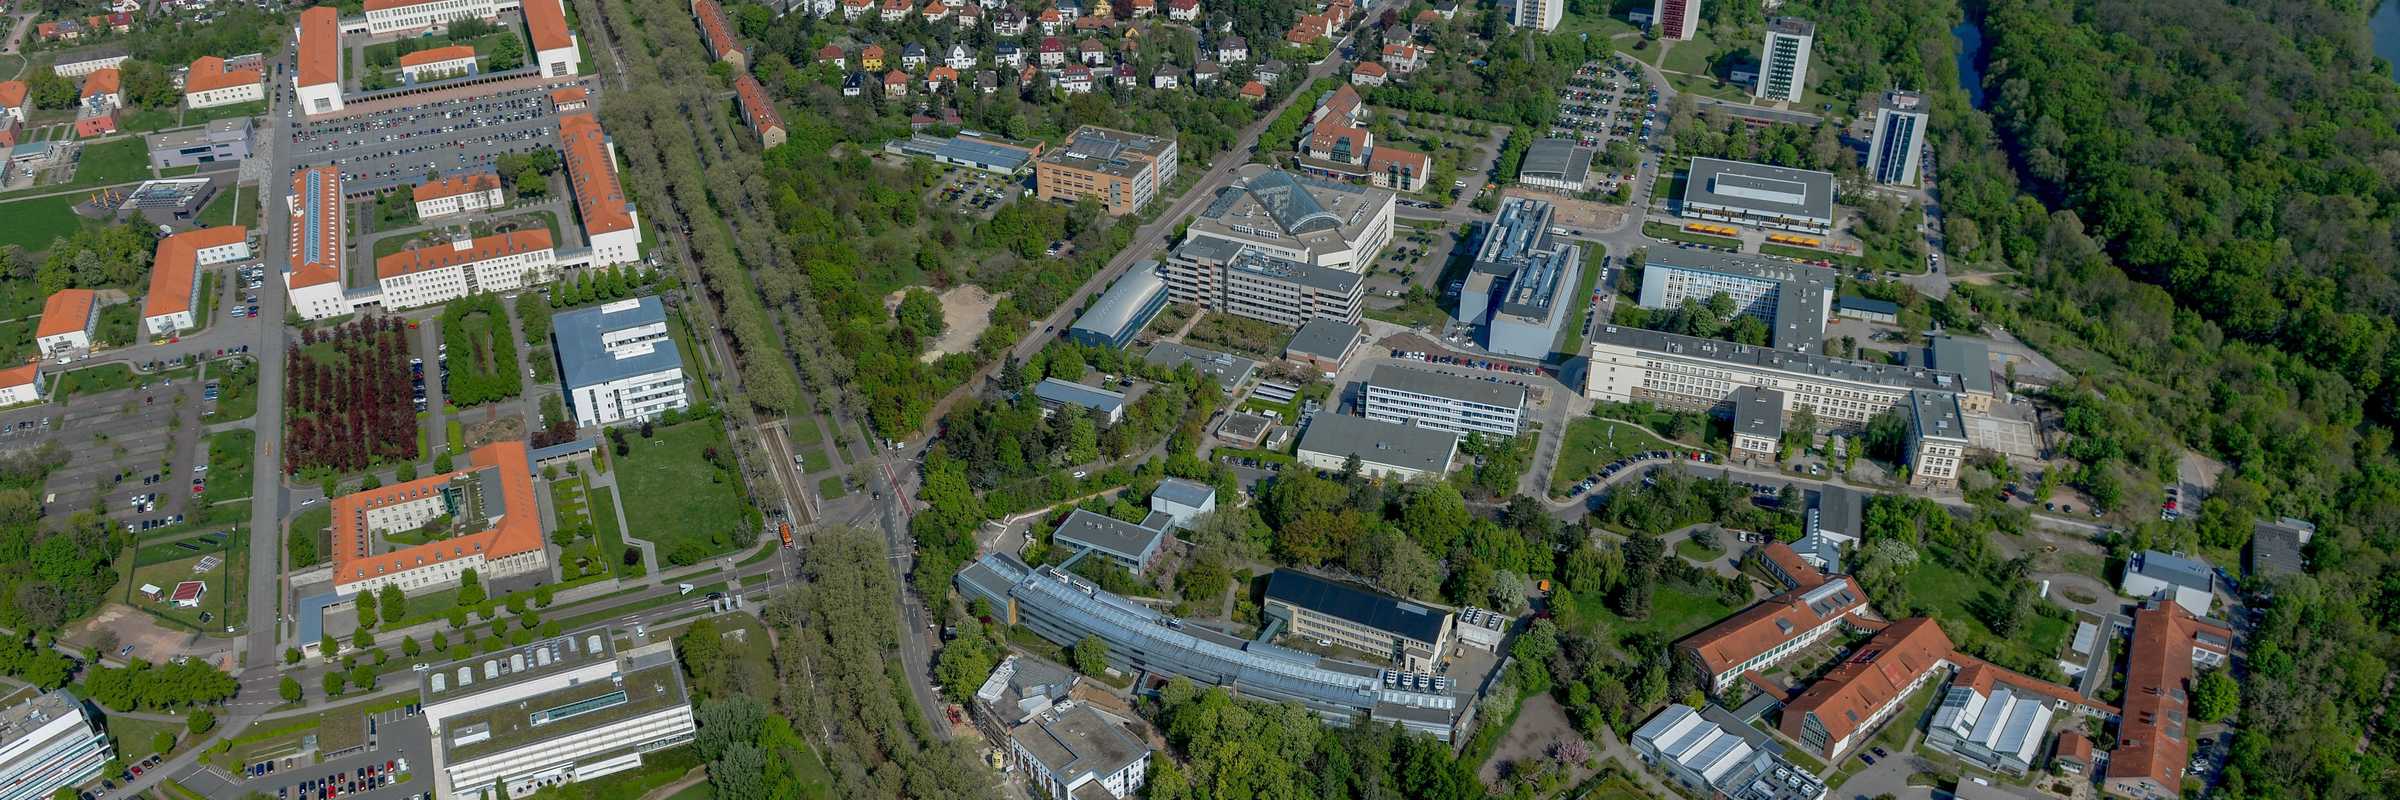 Campus, Foto: Andreas Stedtler, bildershop.mz.de